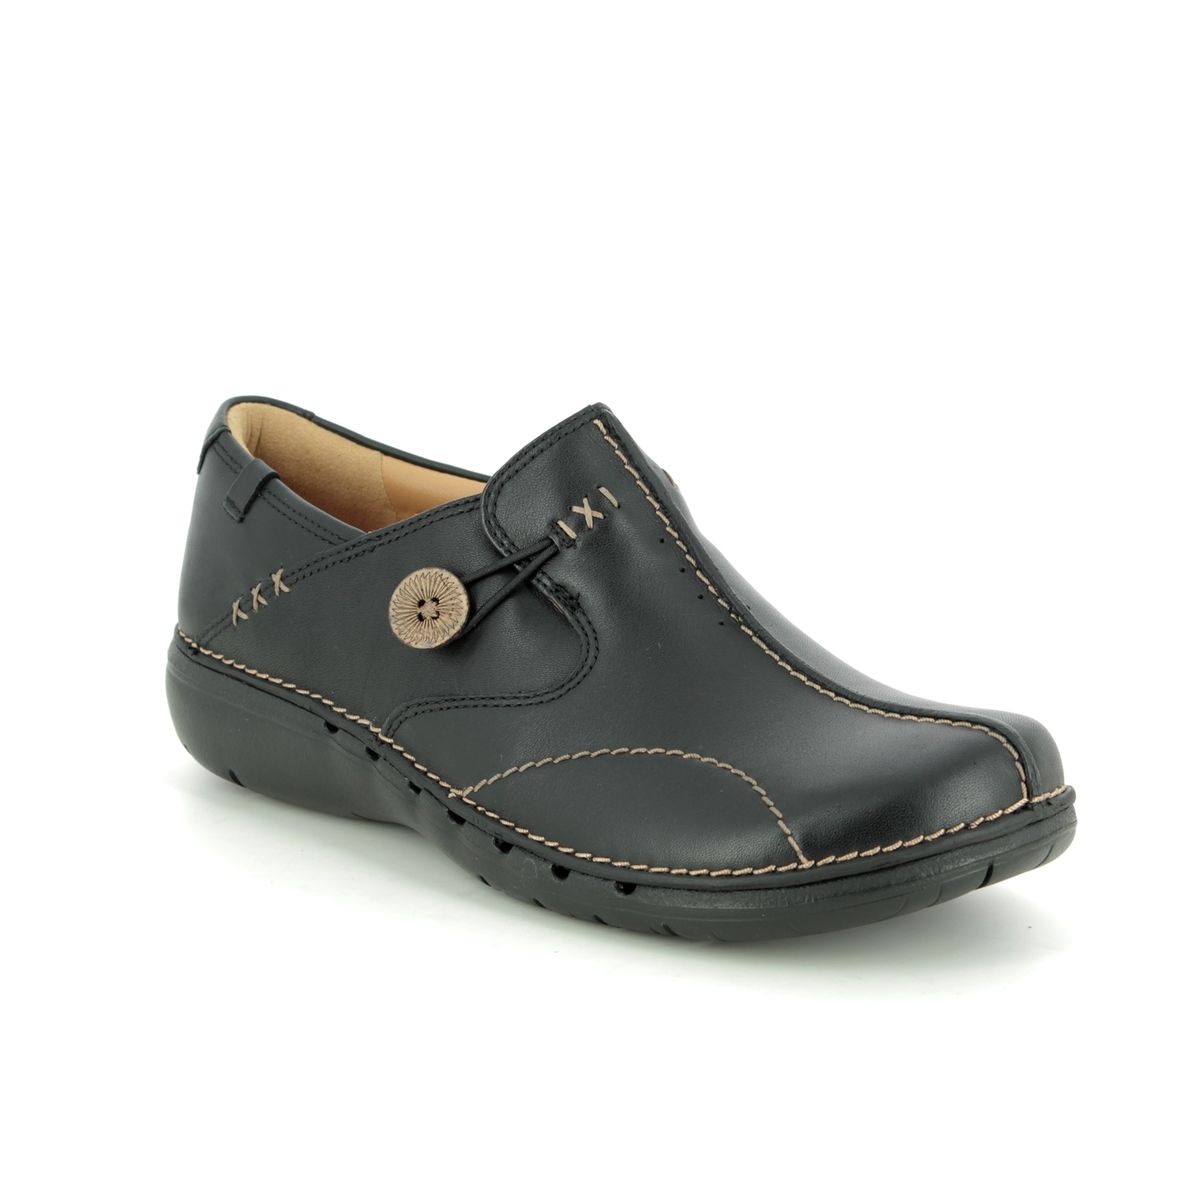 Clarks Un Loop D Fit Black comfort shoes